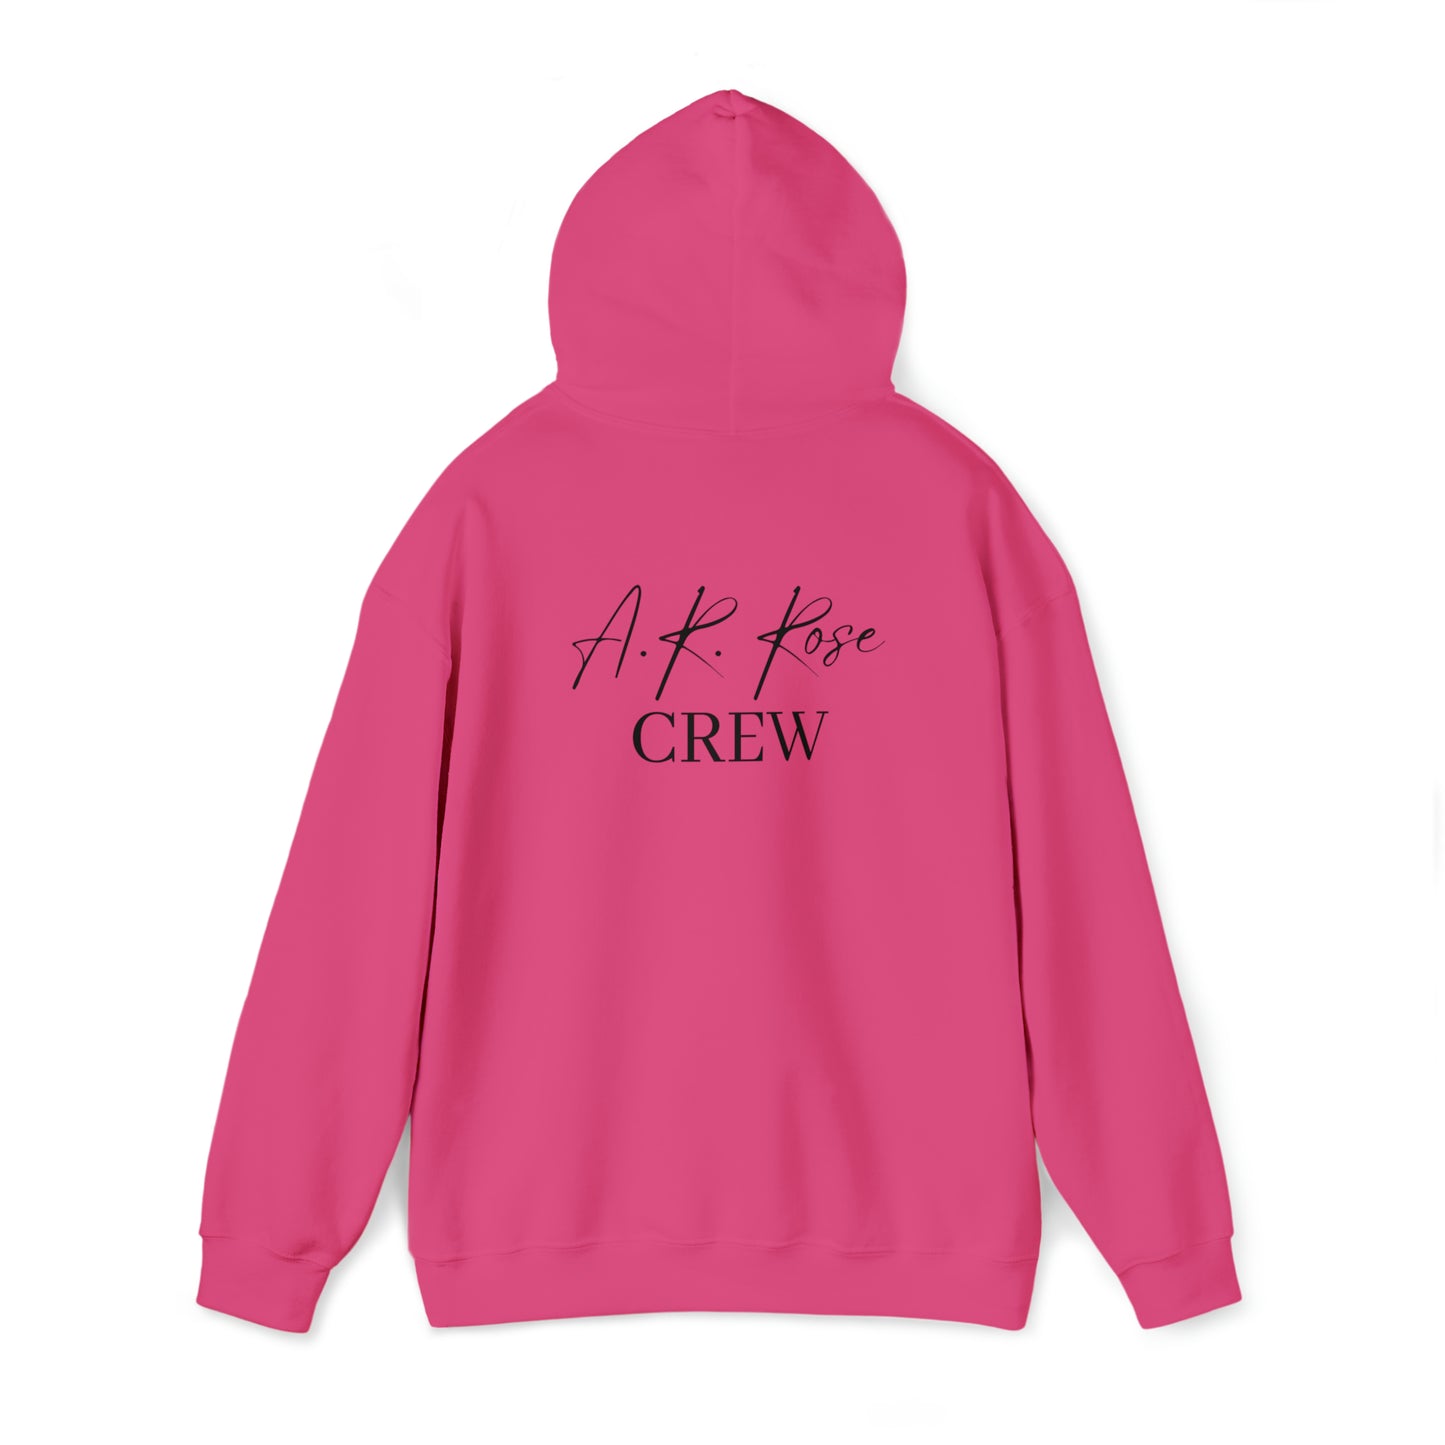 AR Rose Crew Hooded Sweatshirt